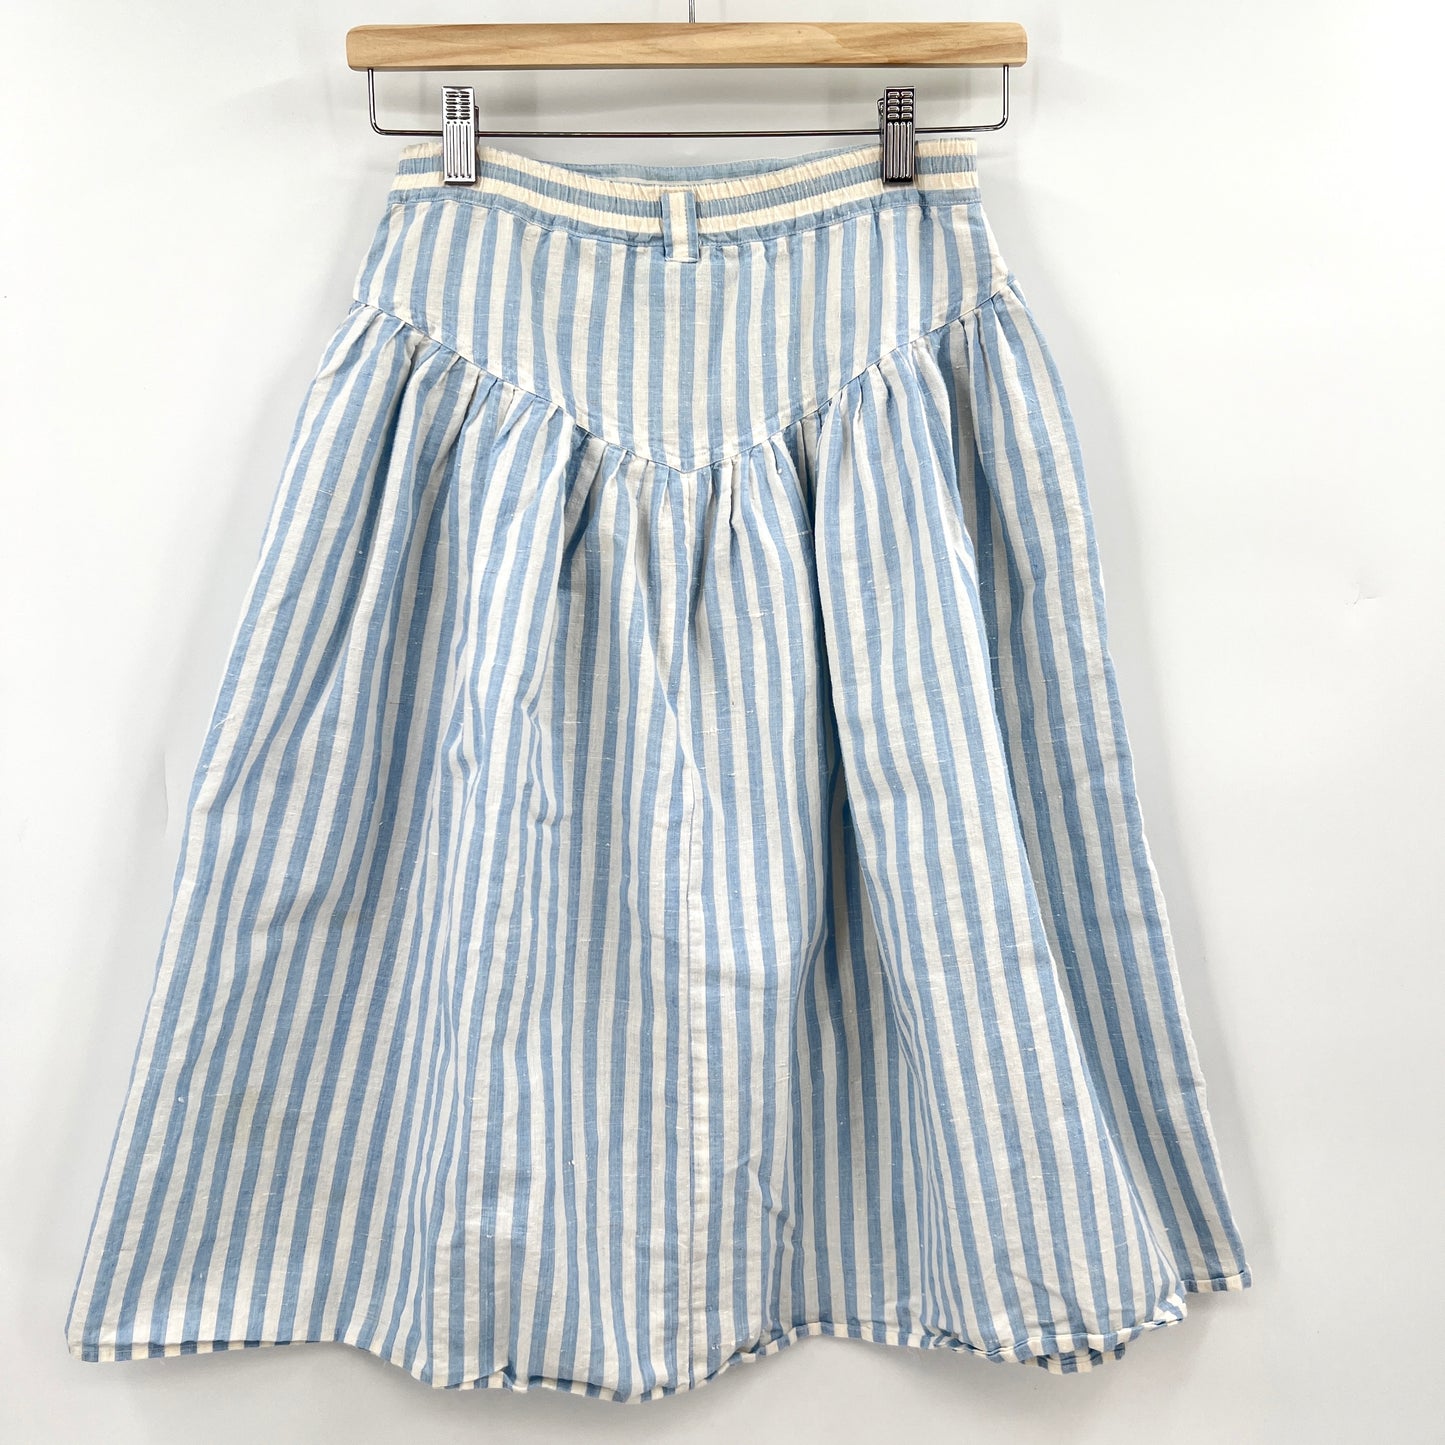 Vintage Ramie Cotton Blend High Waisted Skirt